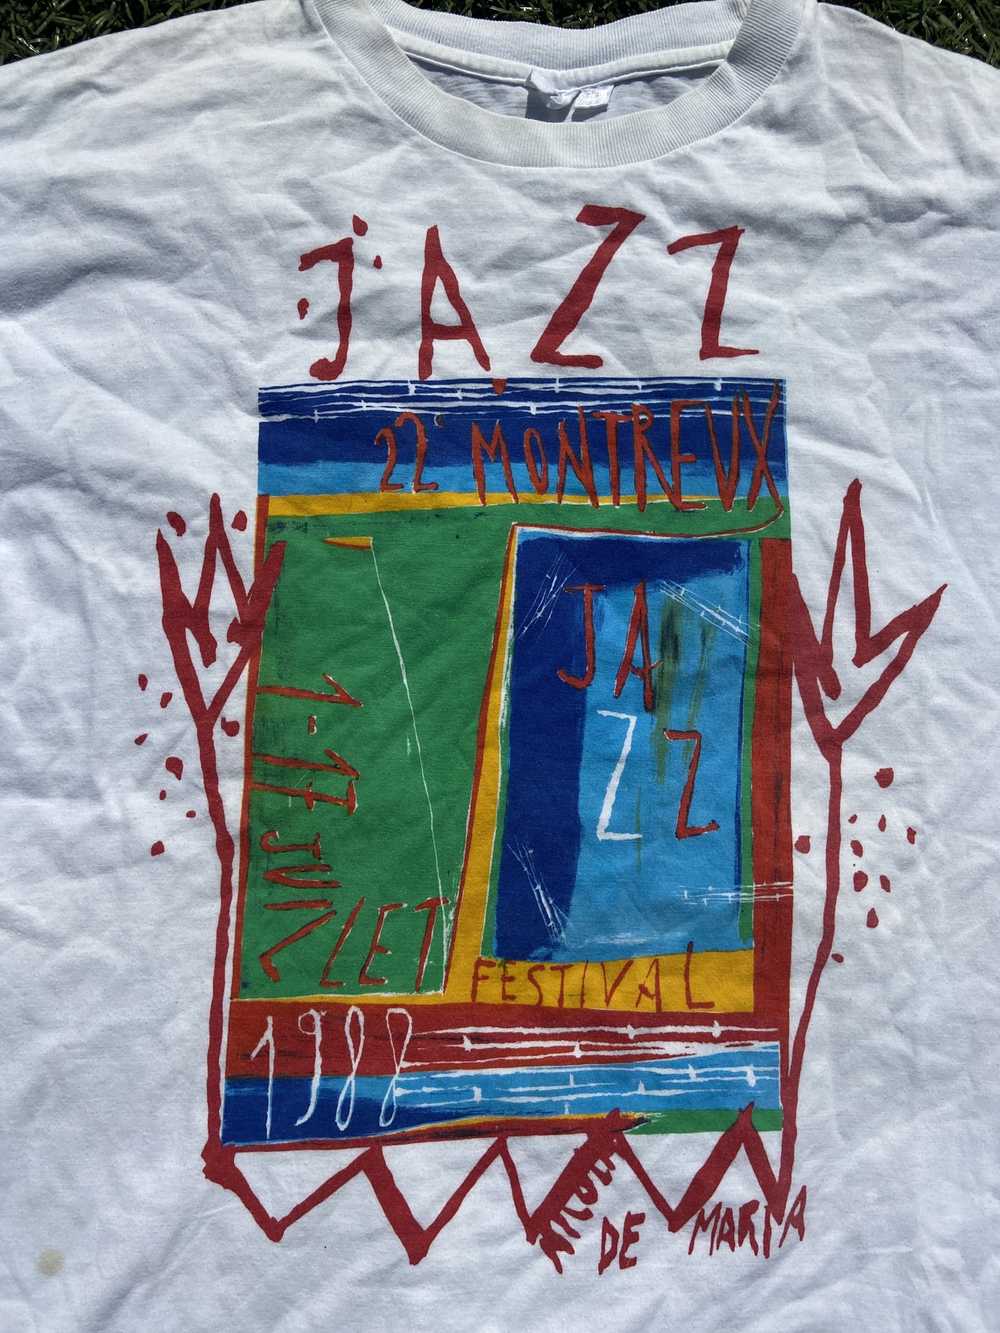 Vintage 1988 Jazz 1-17 Juliet Festival T shirt Tee - image 6